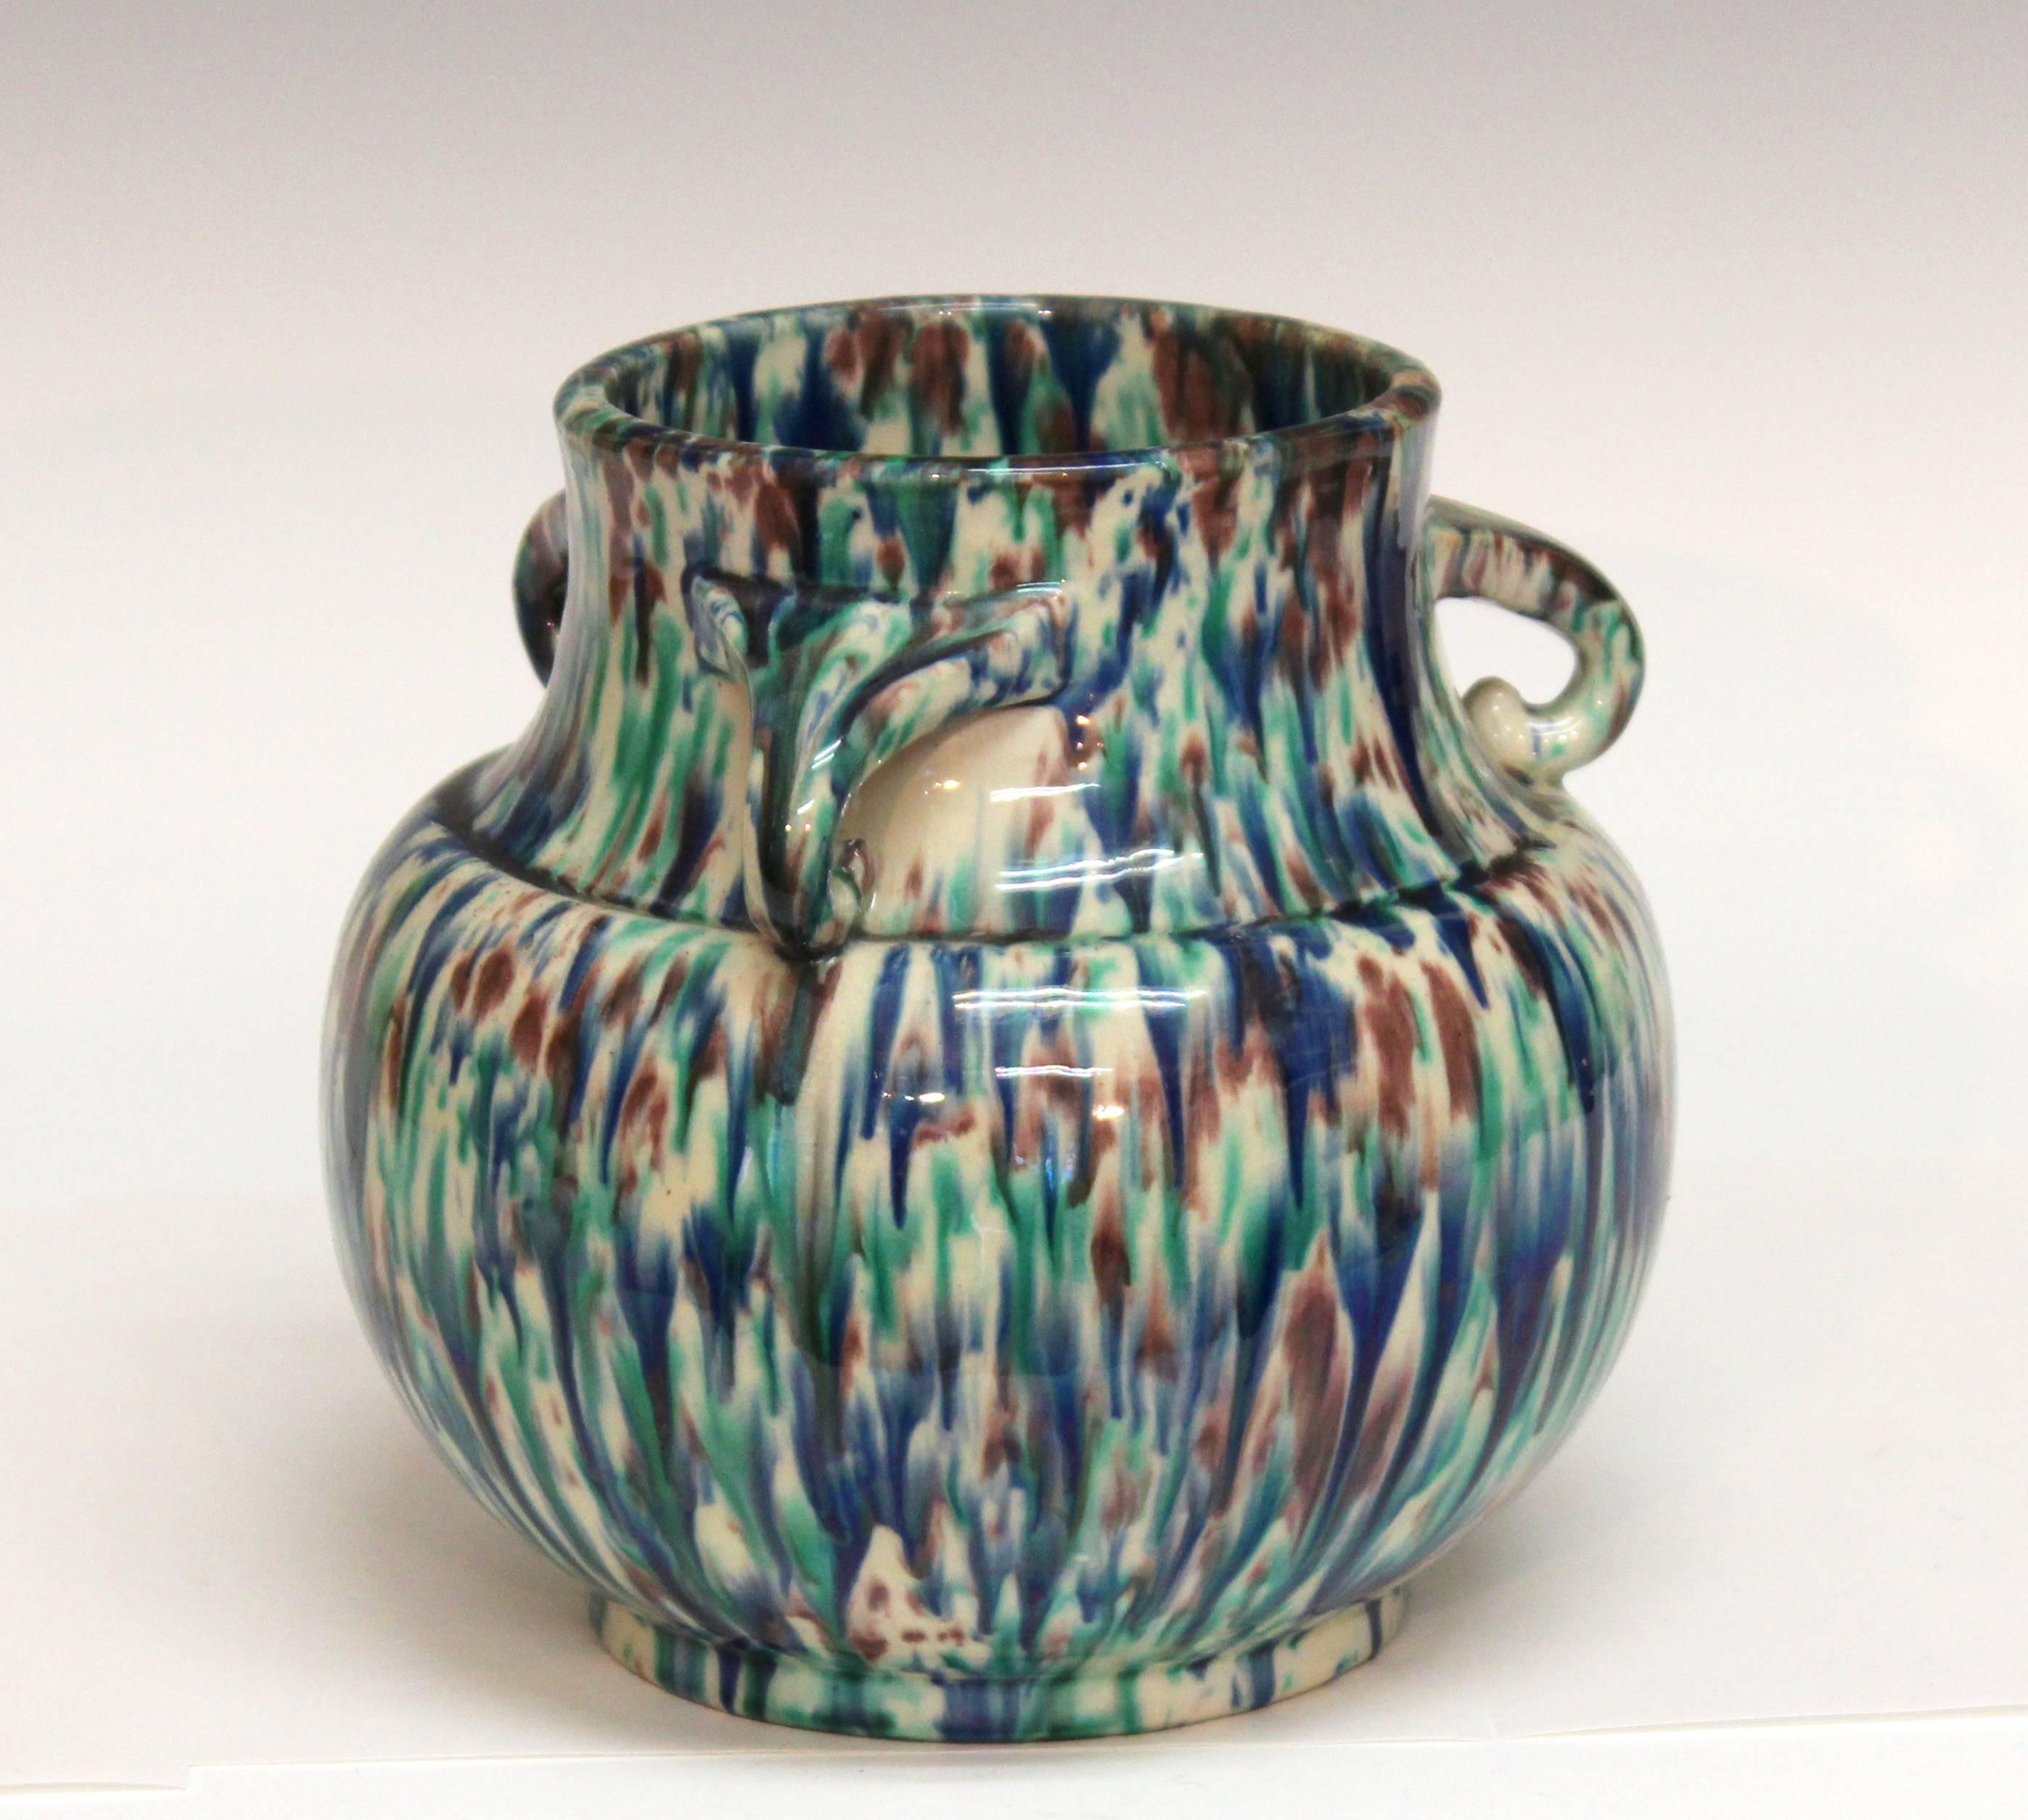 Awaji pottery vase in terrific Art Deco three-handle form with great polychrome flambé drip glaze, circa 1930. Impressed export, kiln and potter's marks. 7